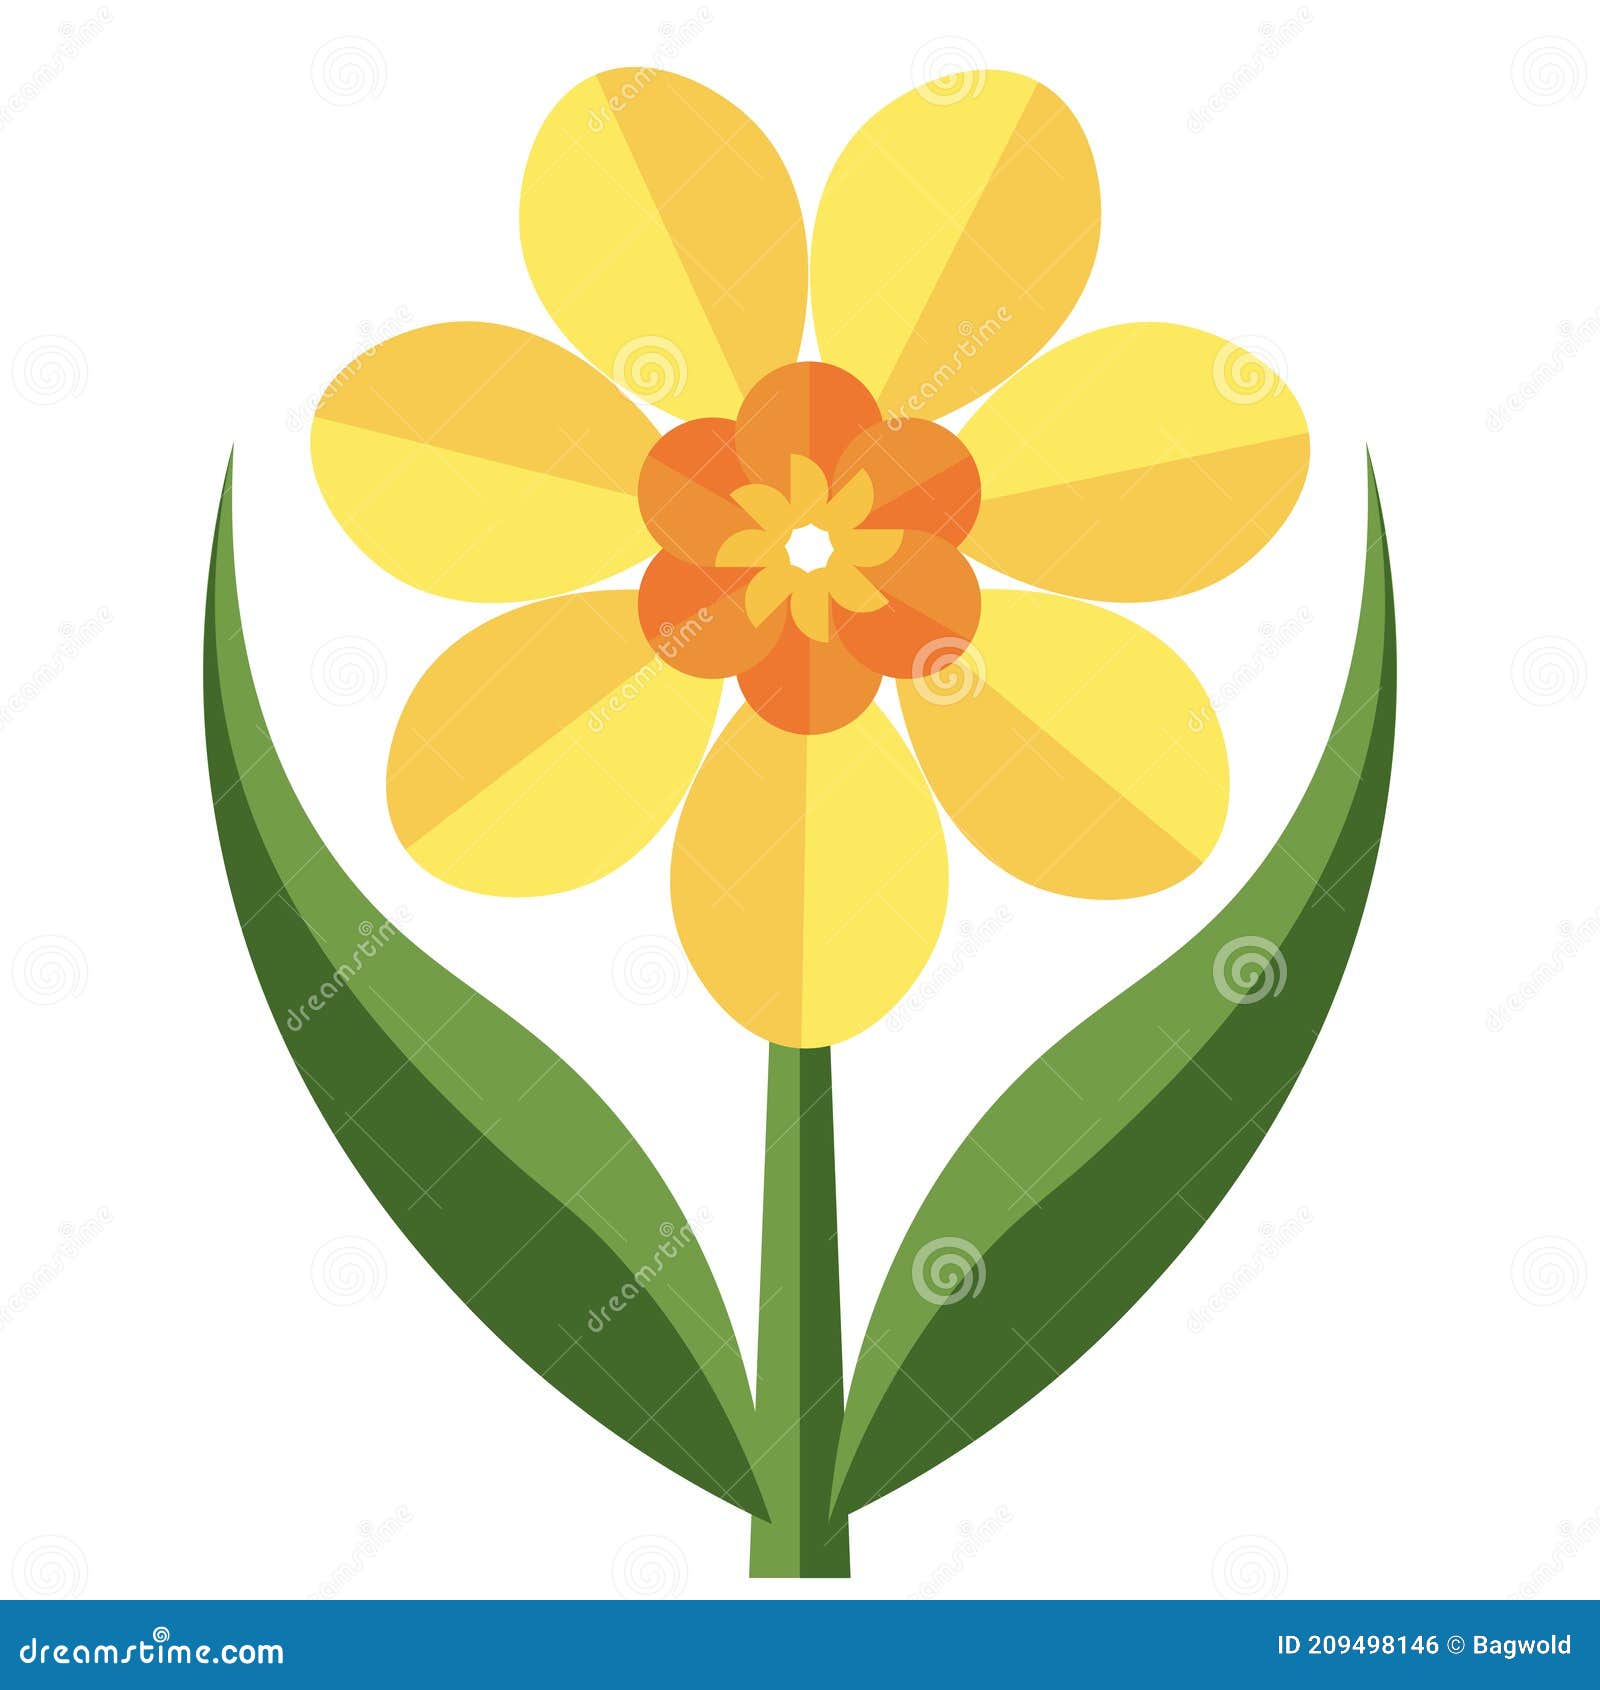 Daffodil Flower Vector Illustration on a White Background Stock Vector ...